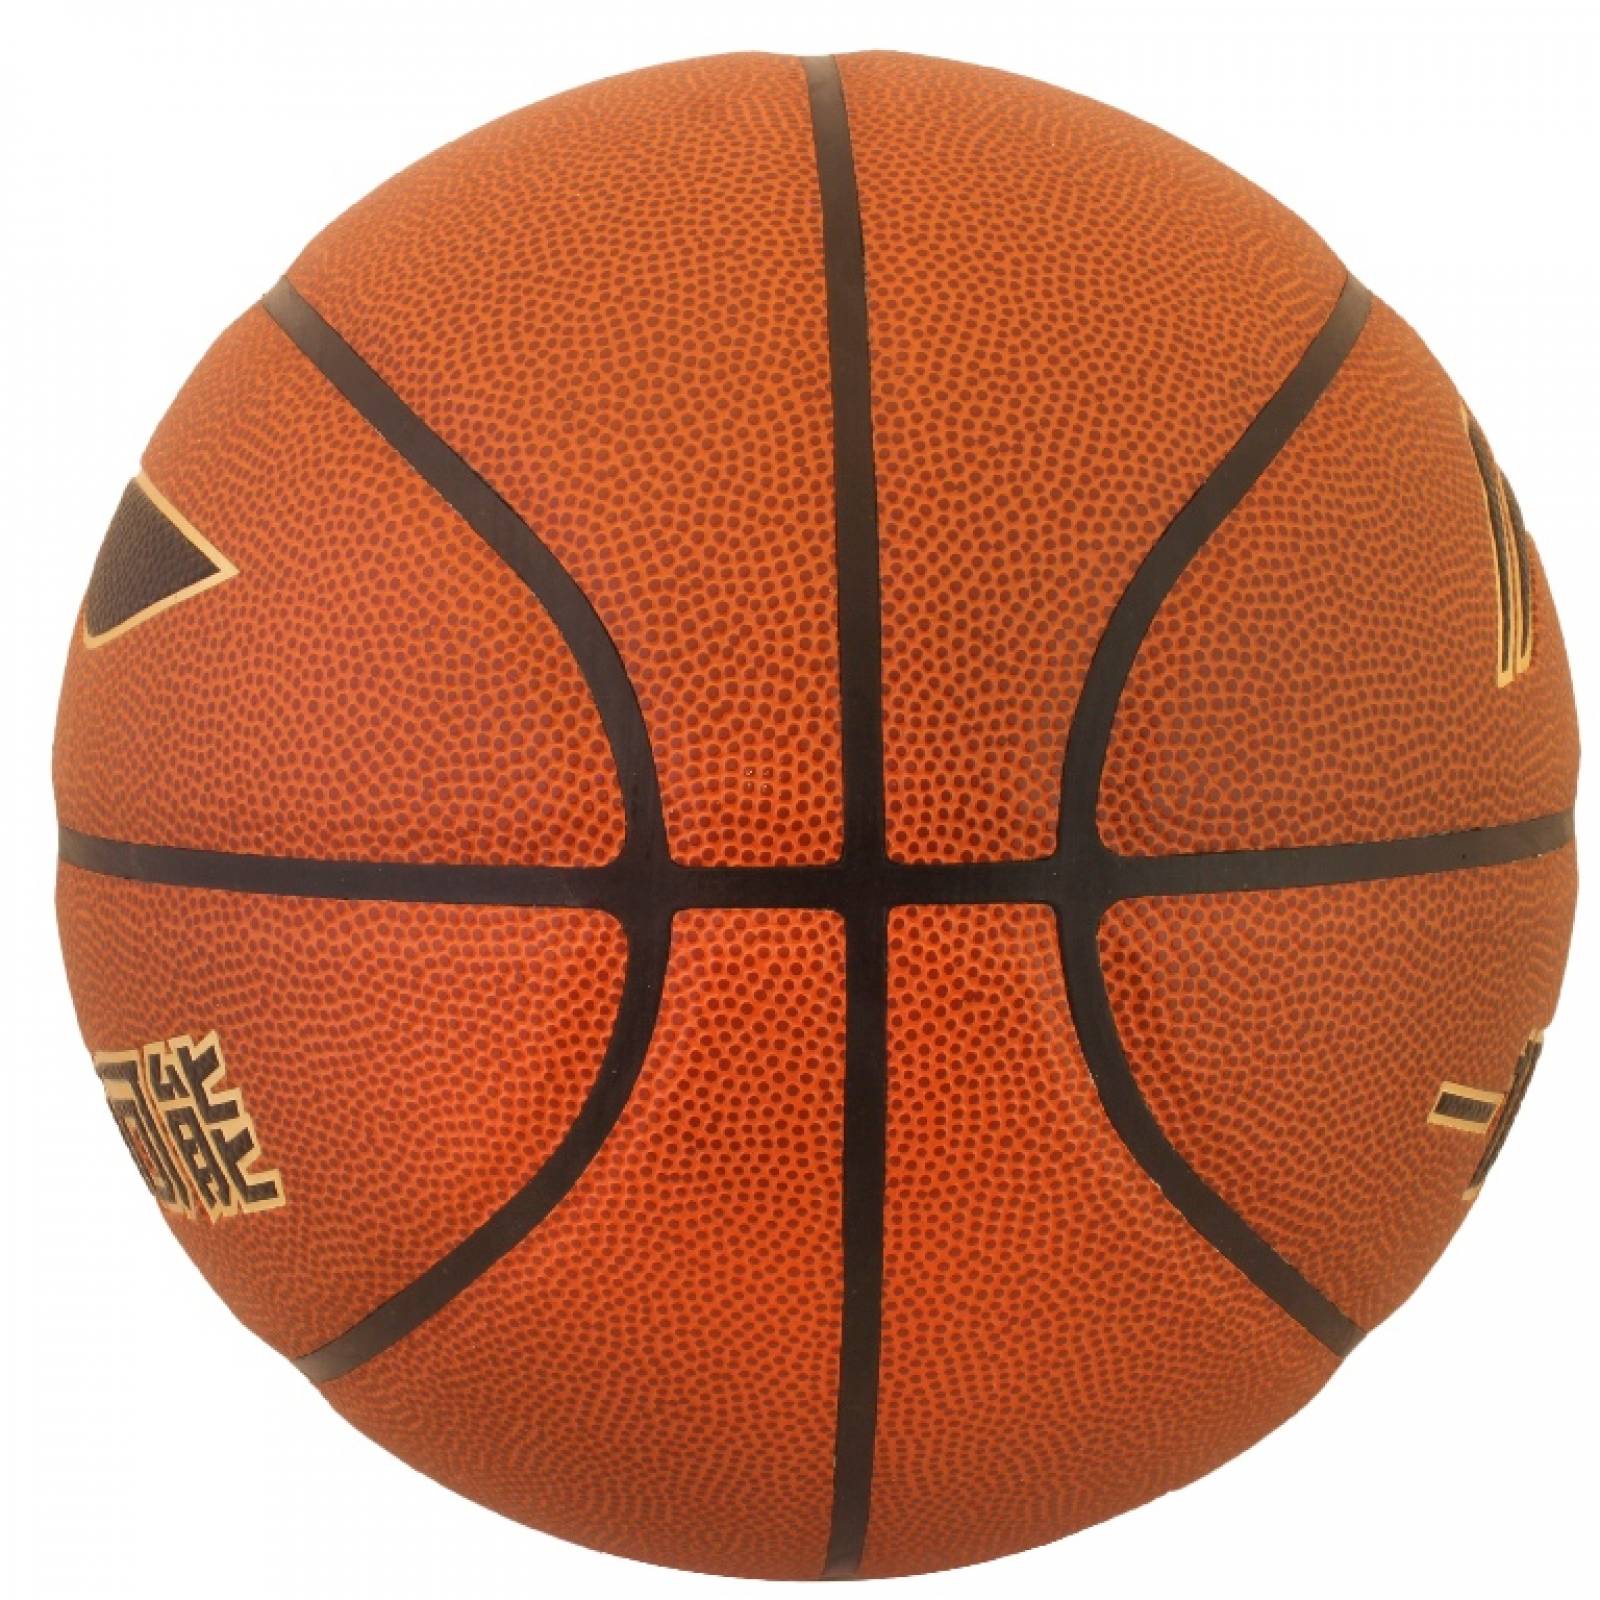 Balon de Basketball Li-Ning ABQP054-1 color Naranja Unisex